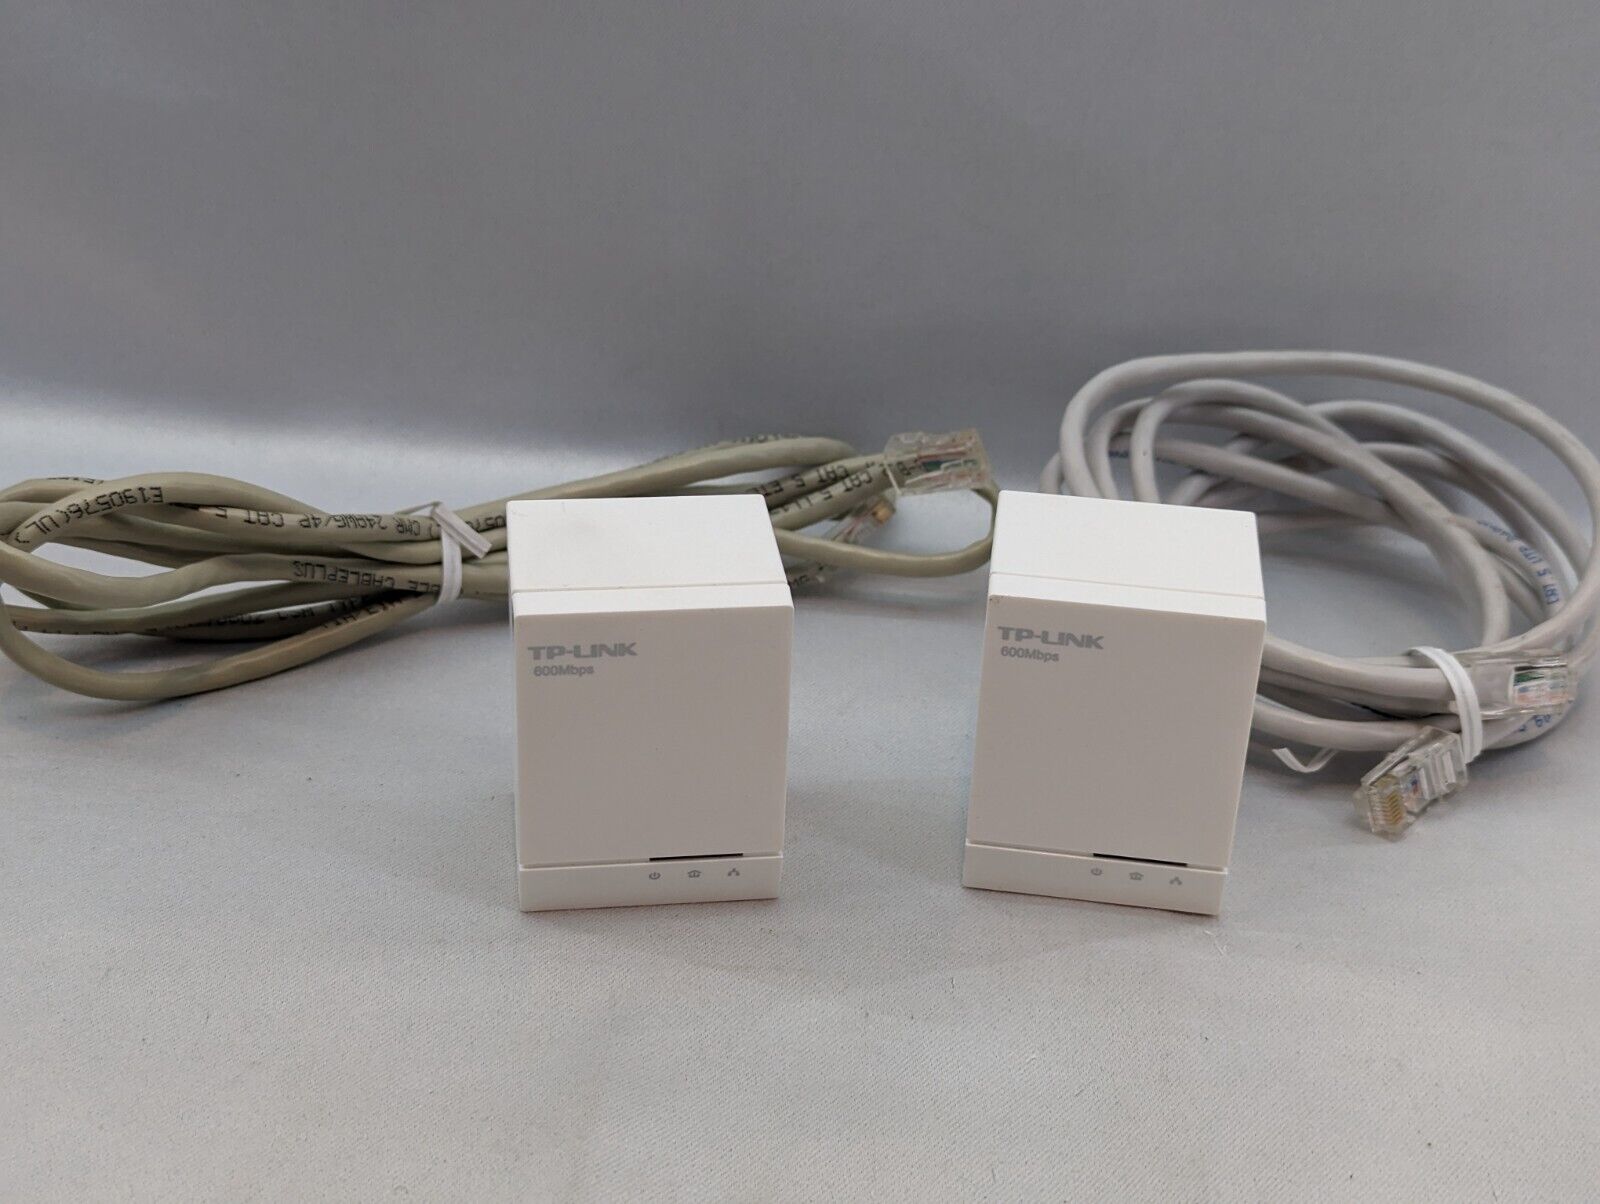 🔥Works🔥 2 x TP-LINK AV600 GIGABIT POWERLINE ADAPTER TL-PA6010 + Cables (C3)